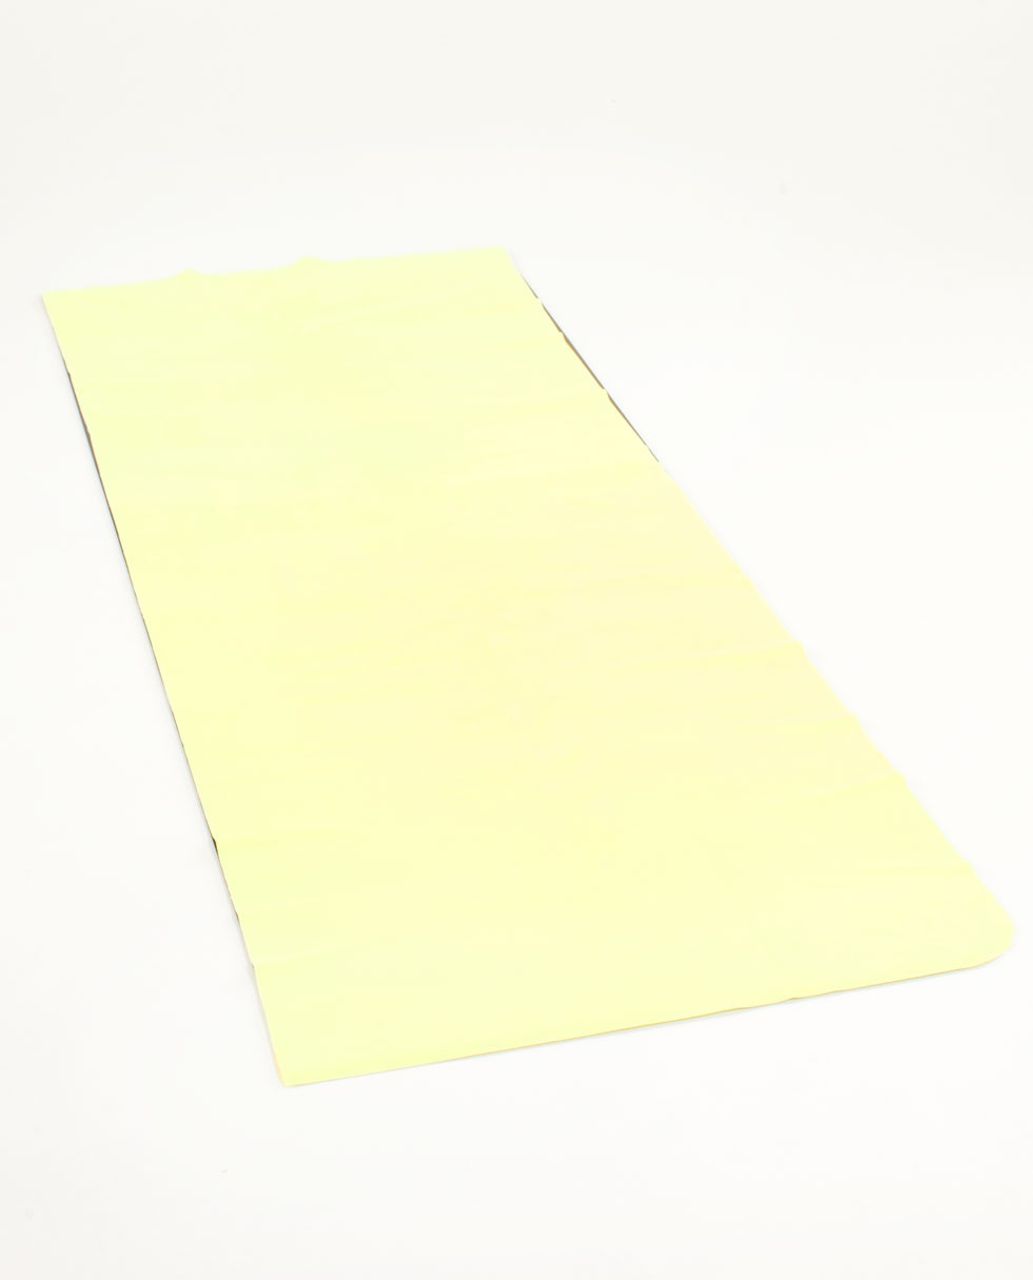 Lululemon The Towel - Clarity Yellow